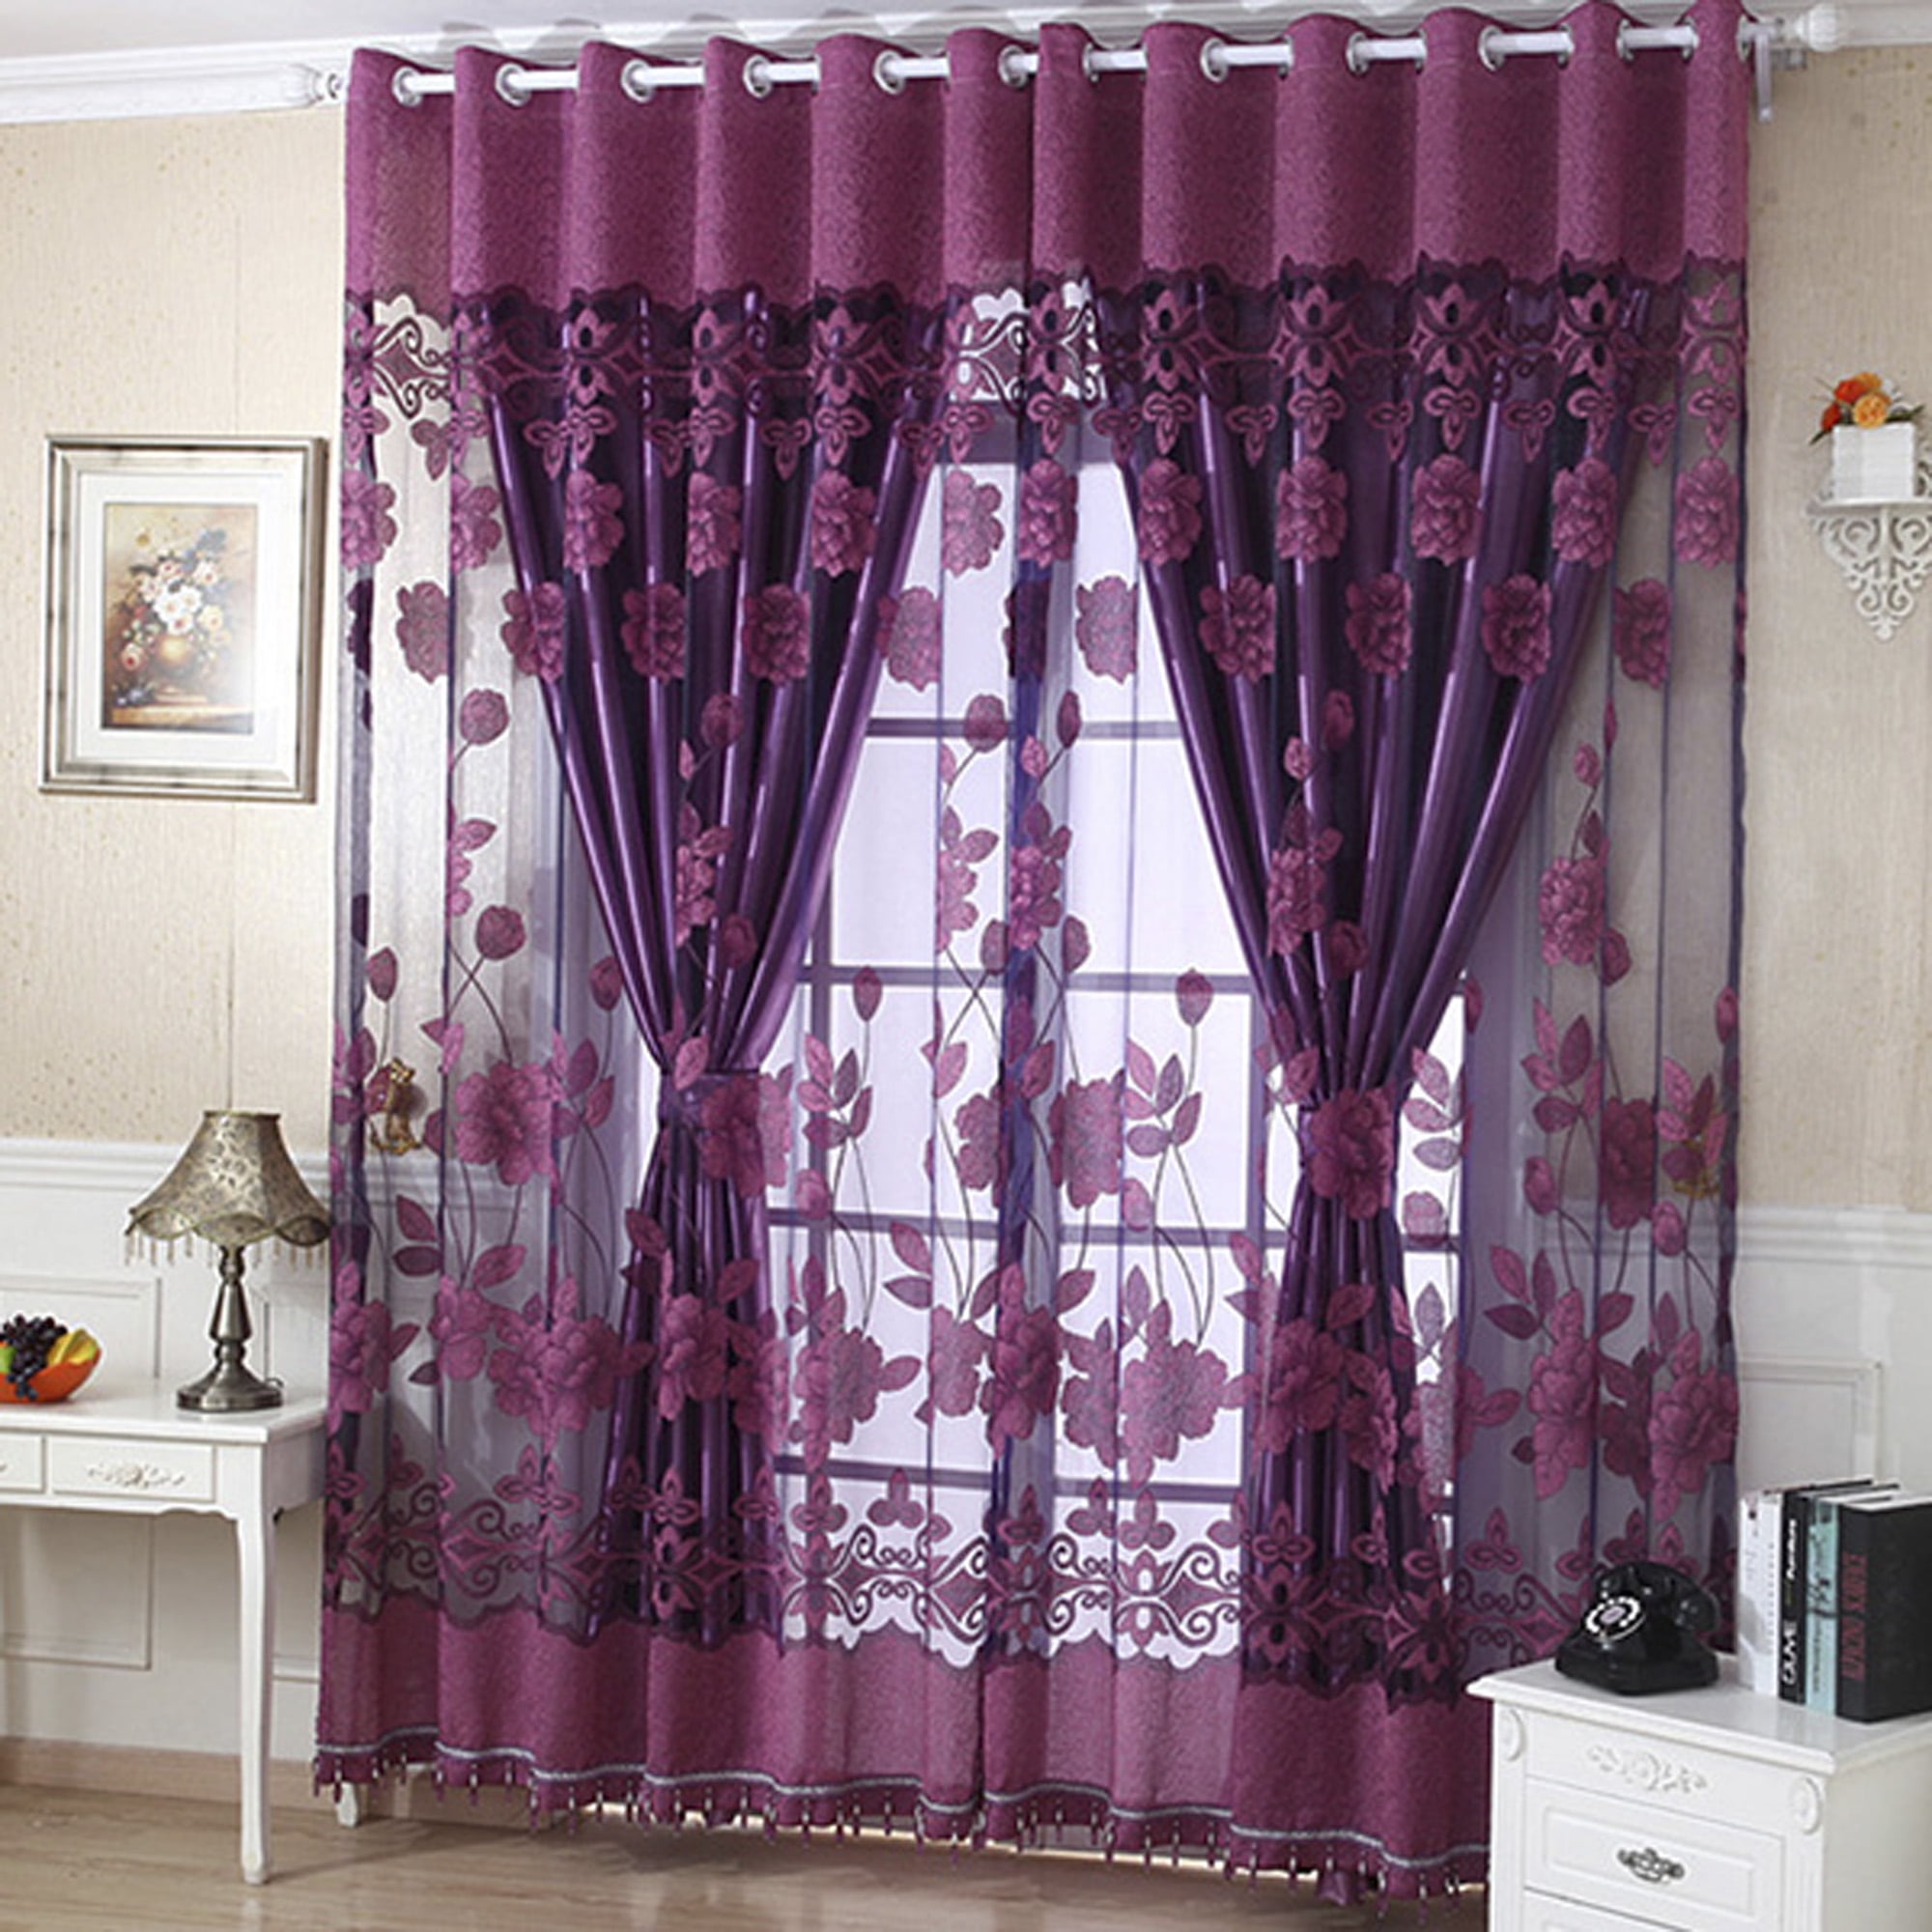 Bedroom Blinds Curtain Door Window Sheer Scarf Drape Panel Decorations Valances 